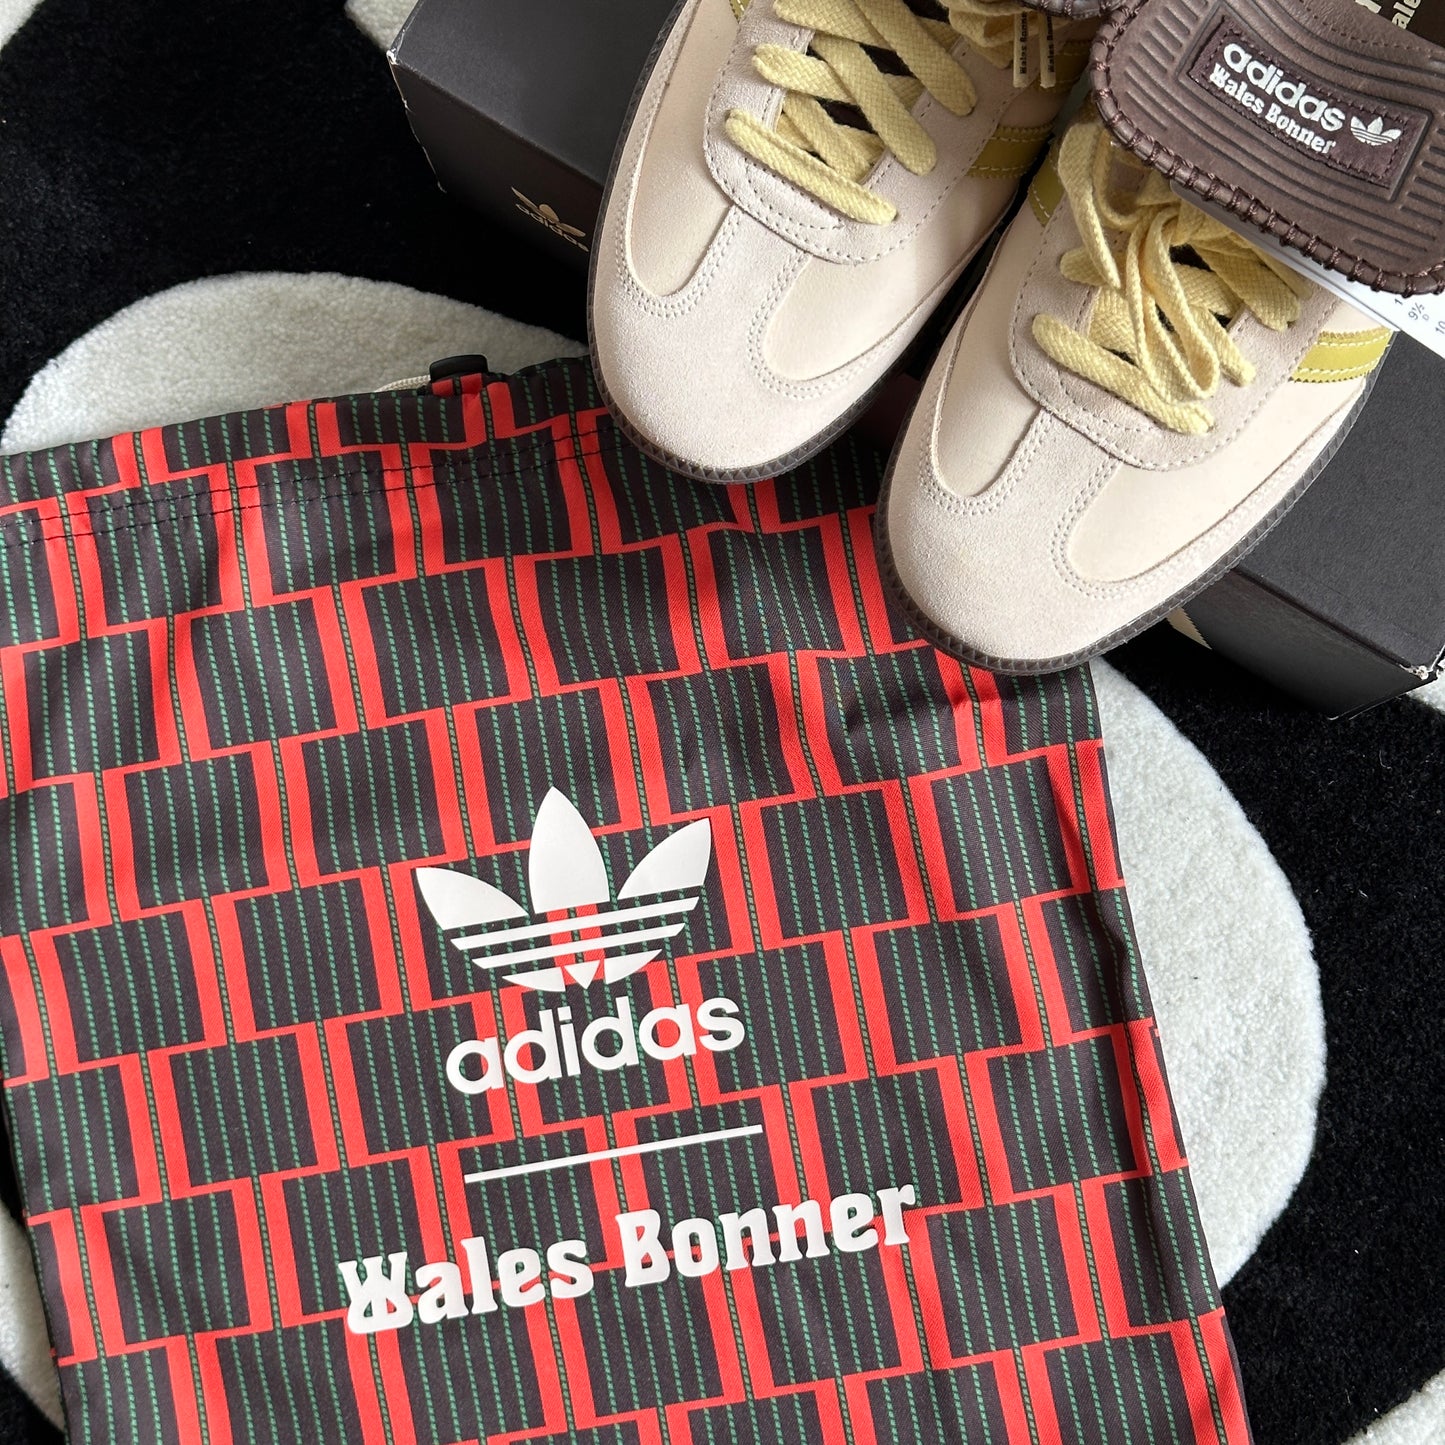 Adidas Samba Nubuck x Wales Bonner